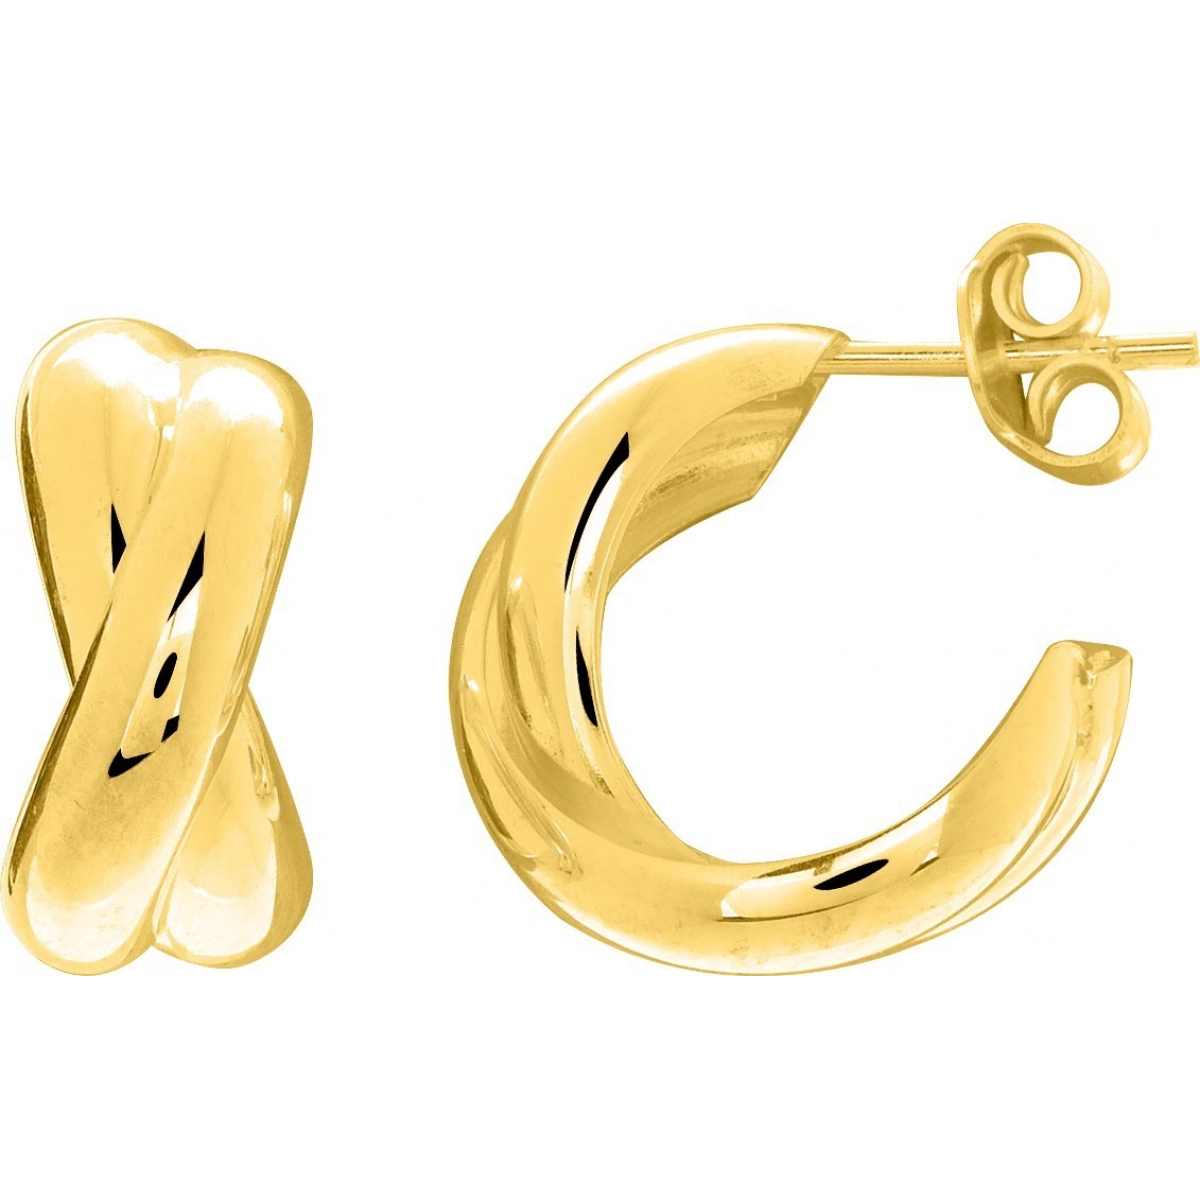 Earrings pair gold plated Brass  Lua Blanca  135608.0